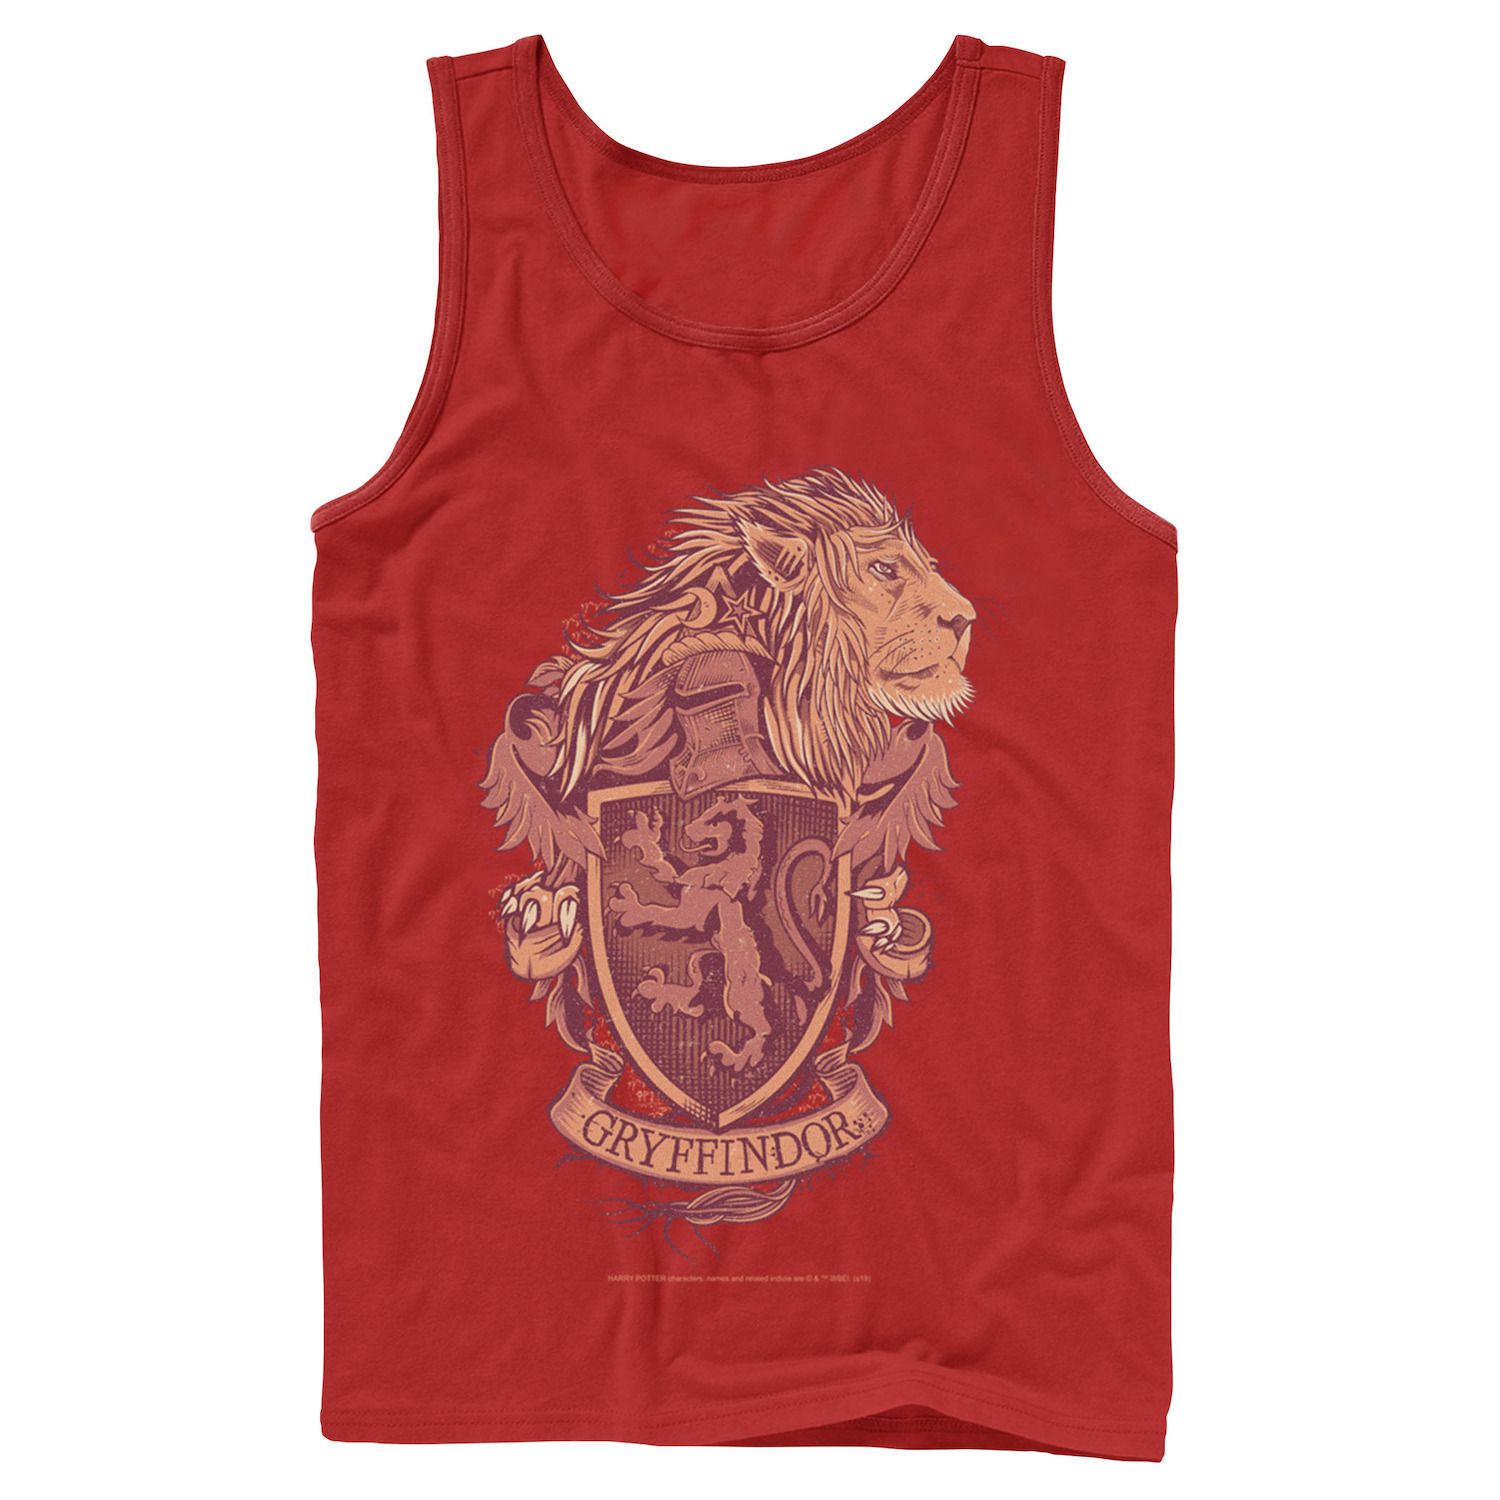 Image for Harry Potter Men's Gryffindor Detailed Crest Graphic Tank Top at Kohl's.